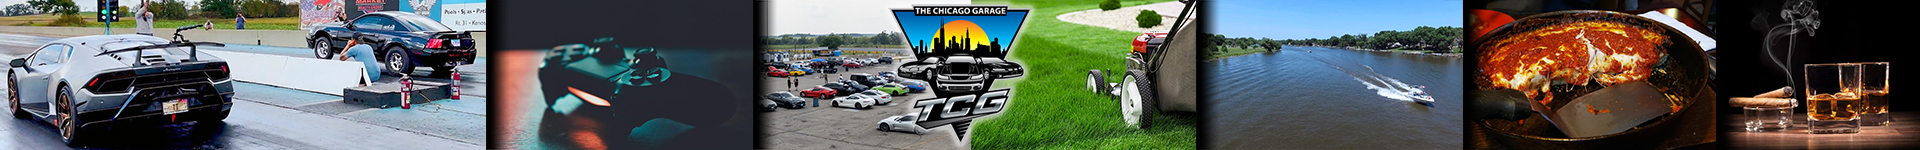 TCG | The Chicago Garage